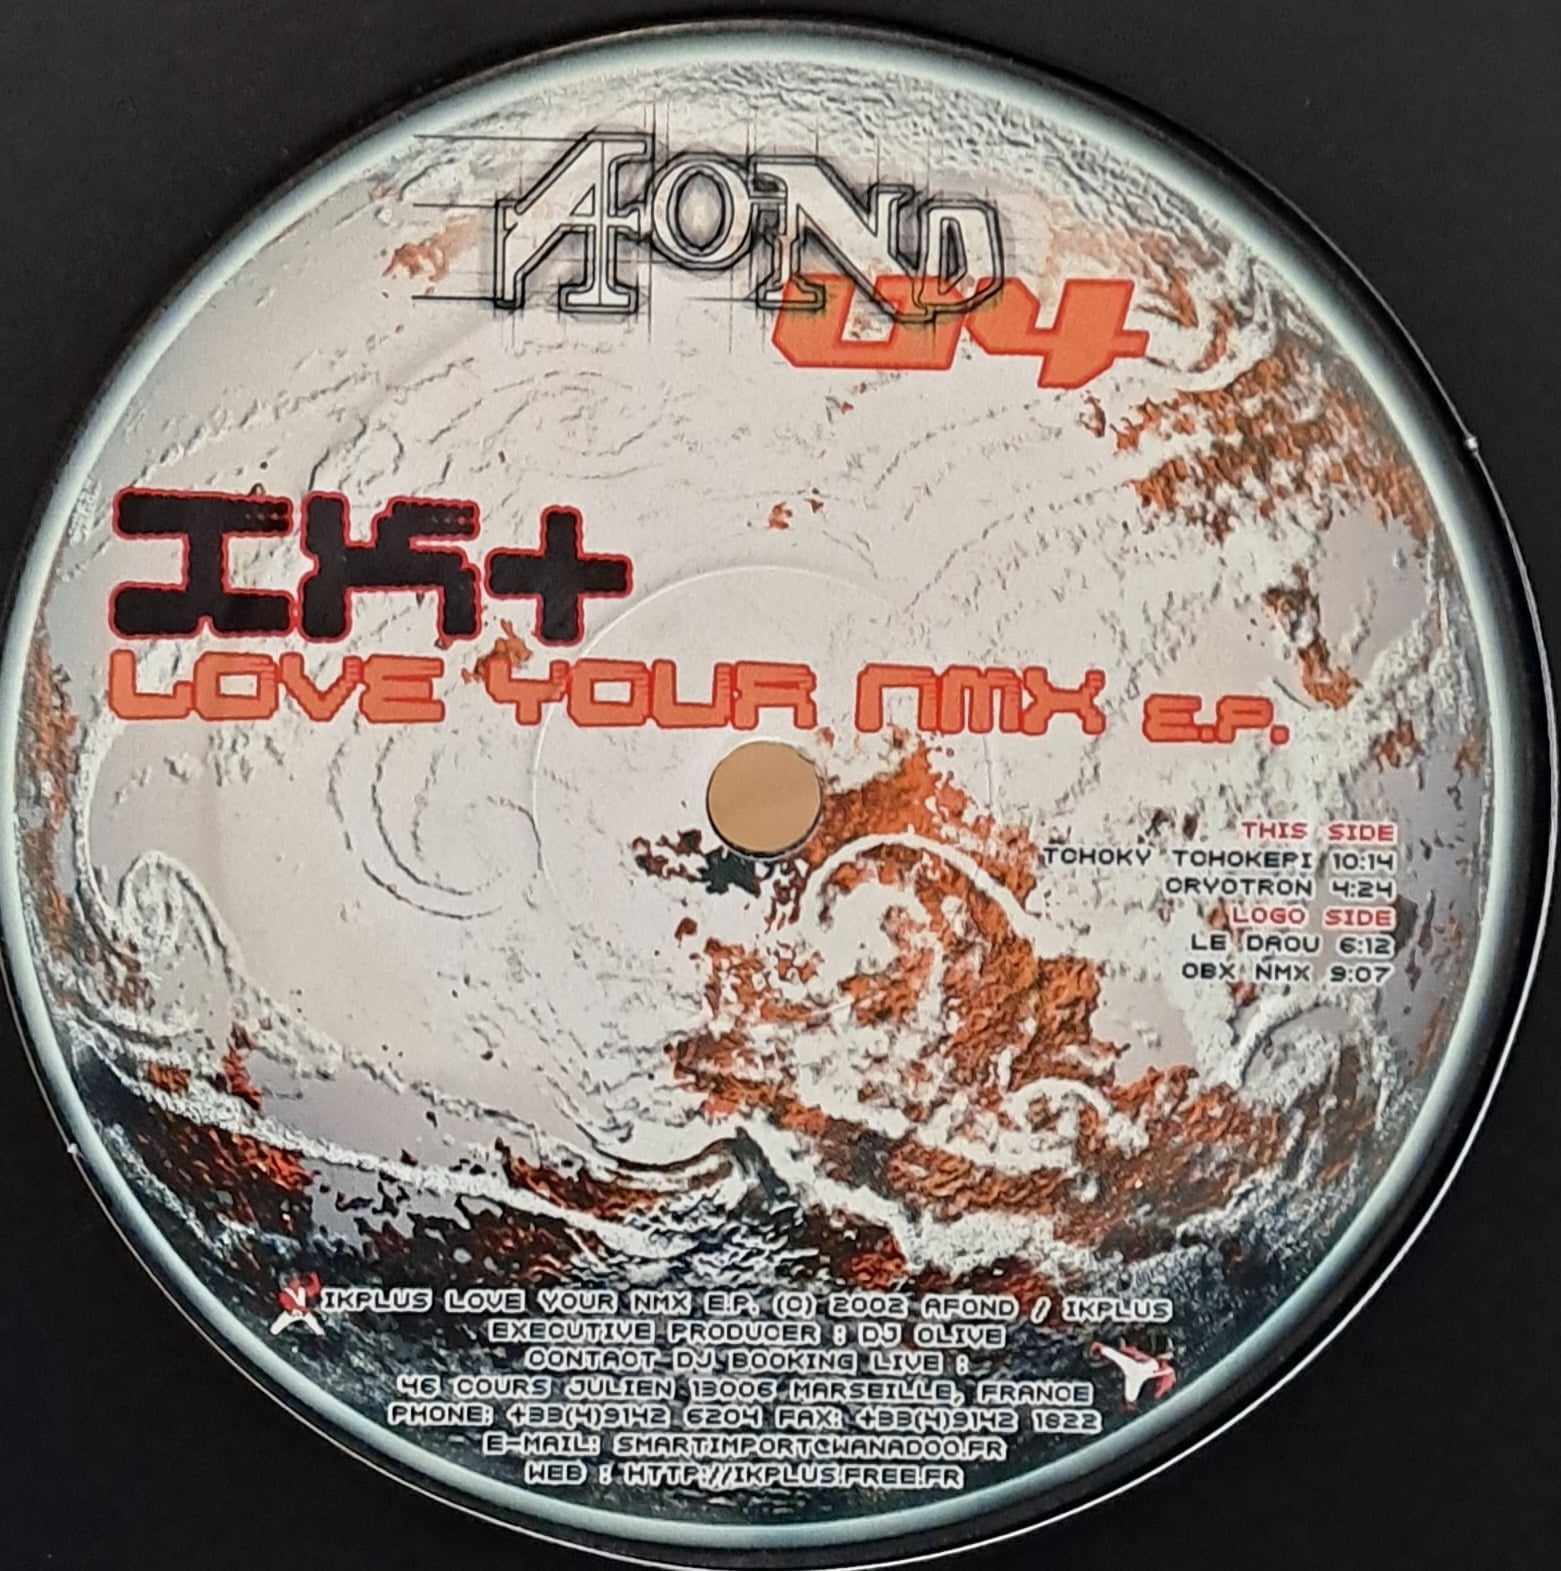 A Fond 04 - vinyle electro